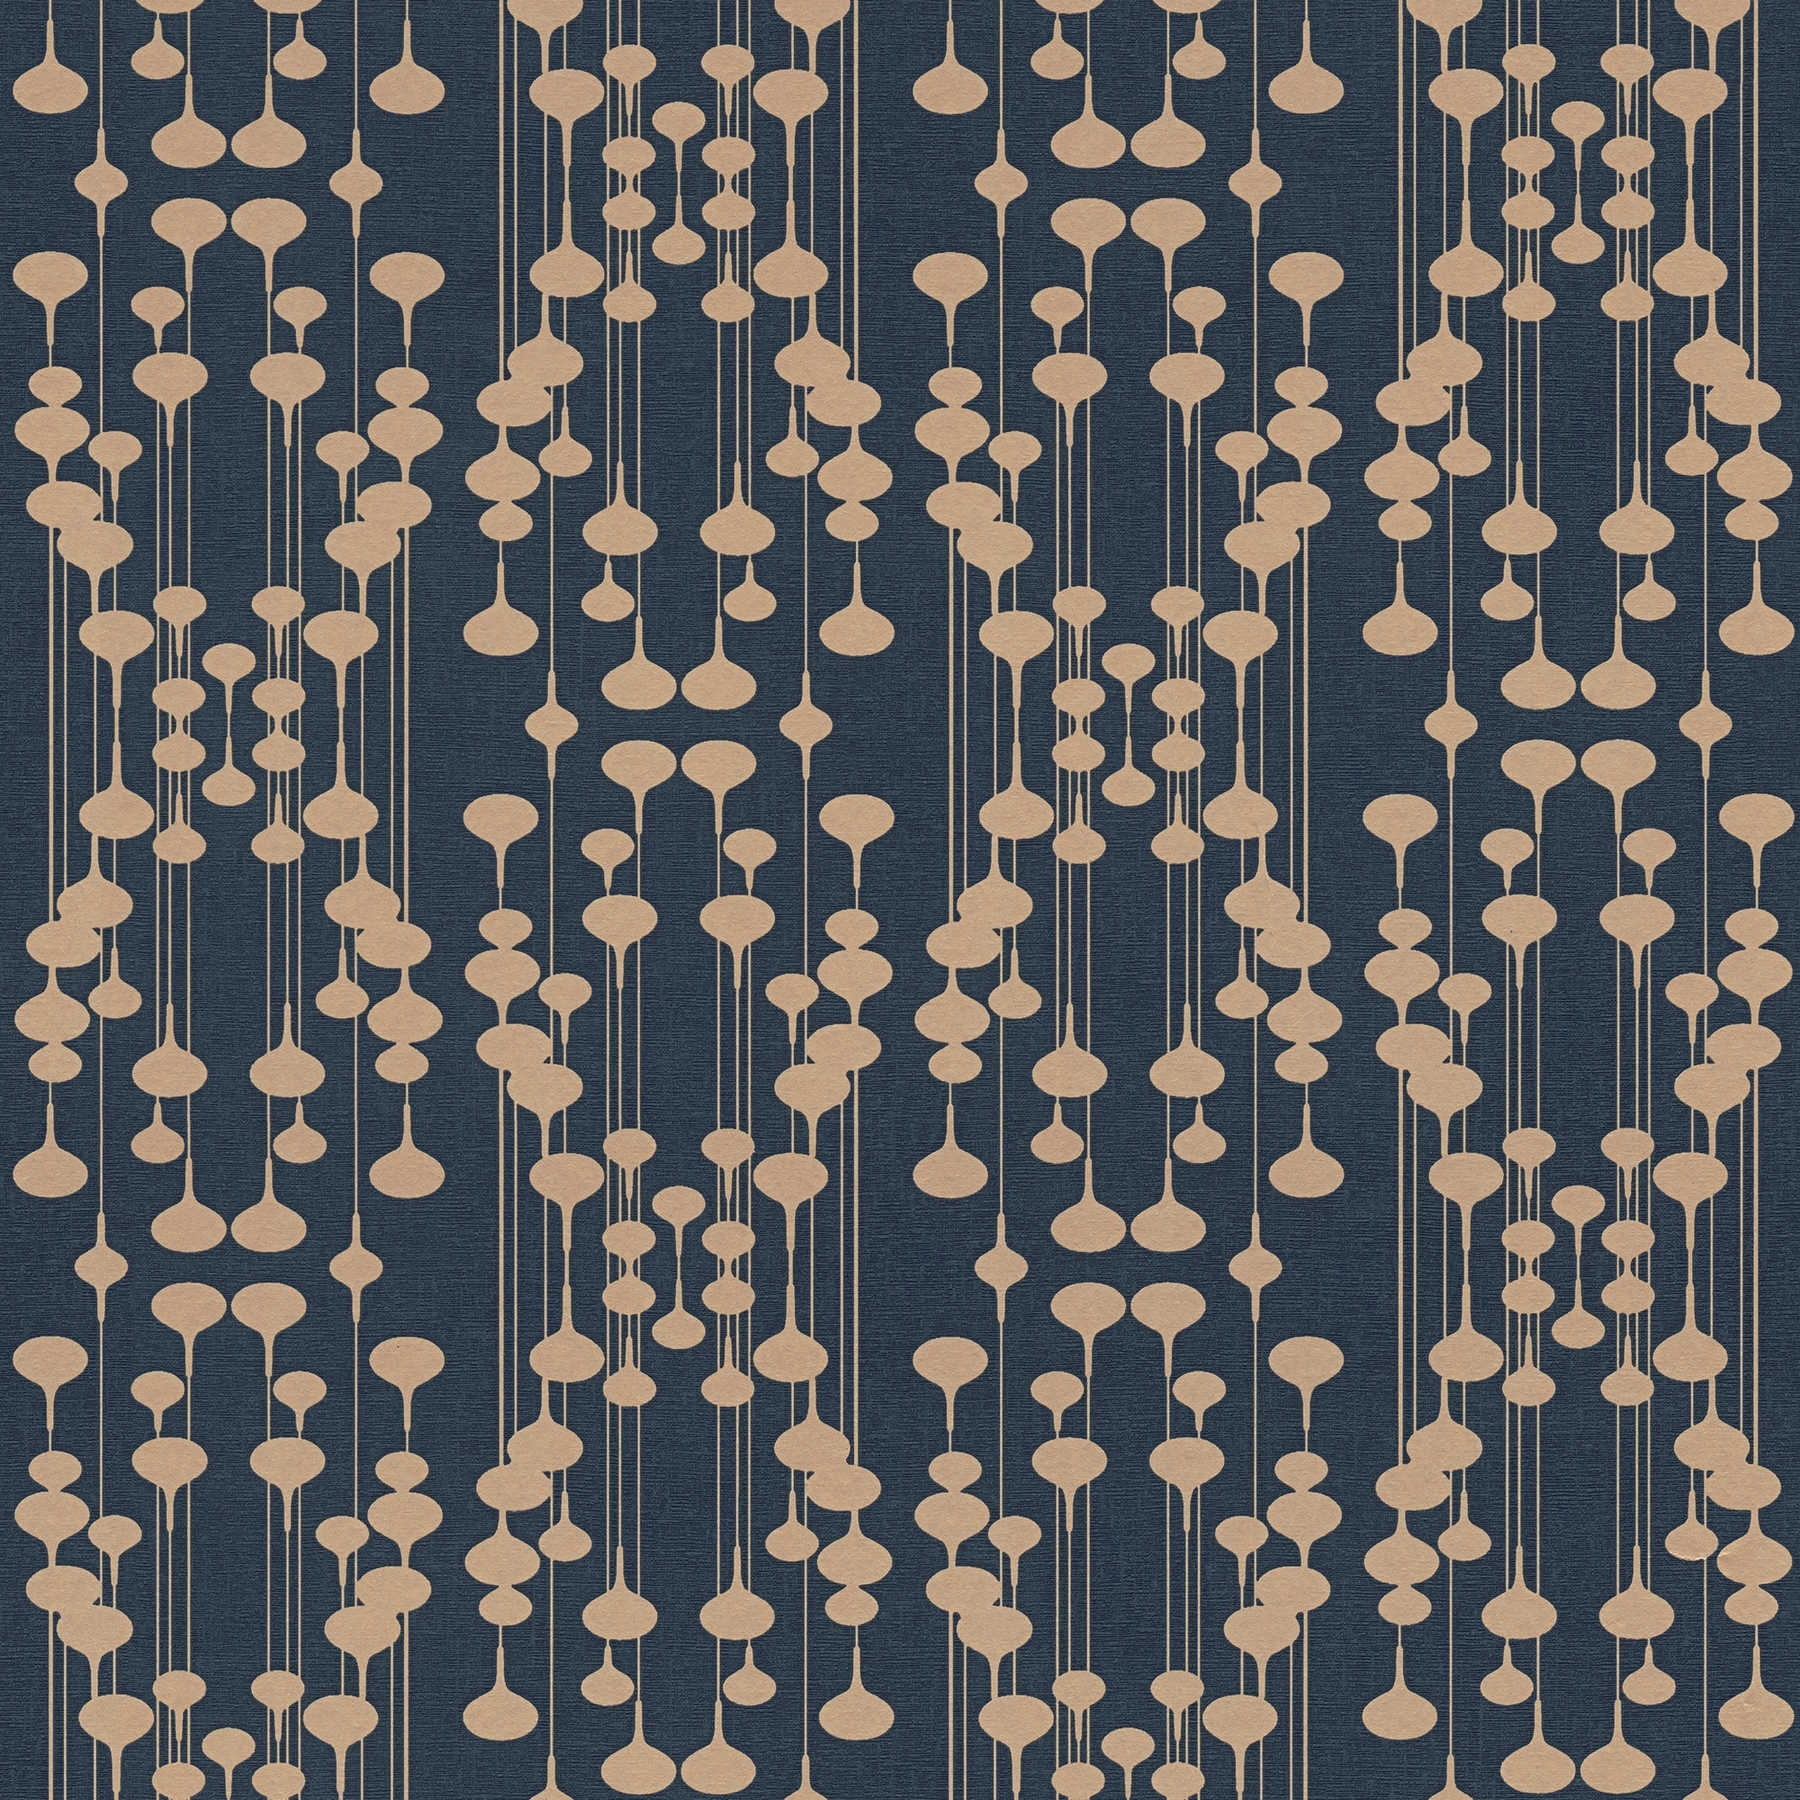         Wallpaper with retro pattern & metallic effect - blue, beige
    